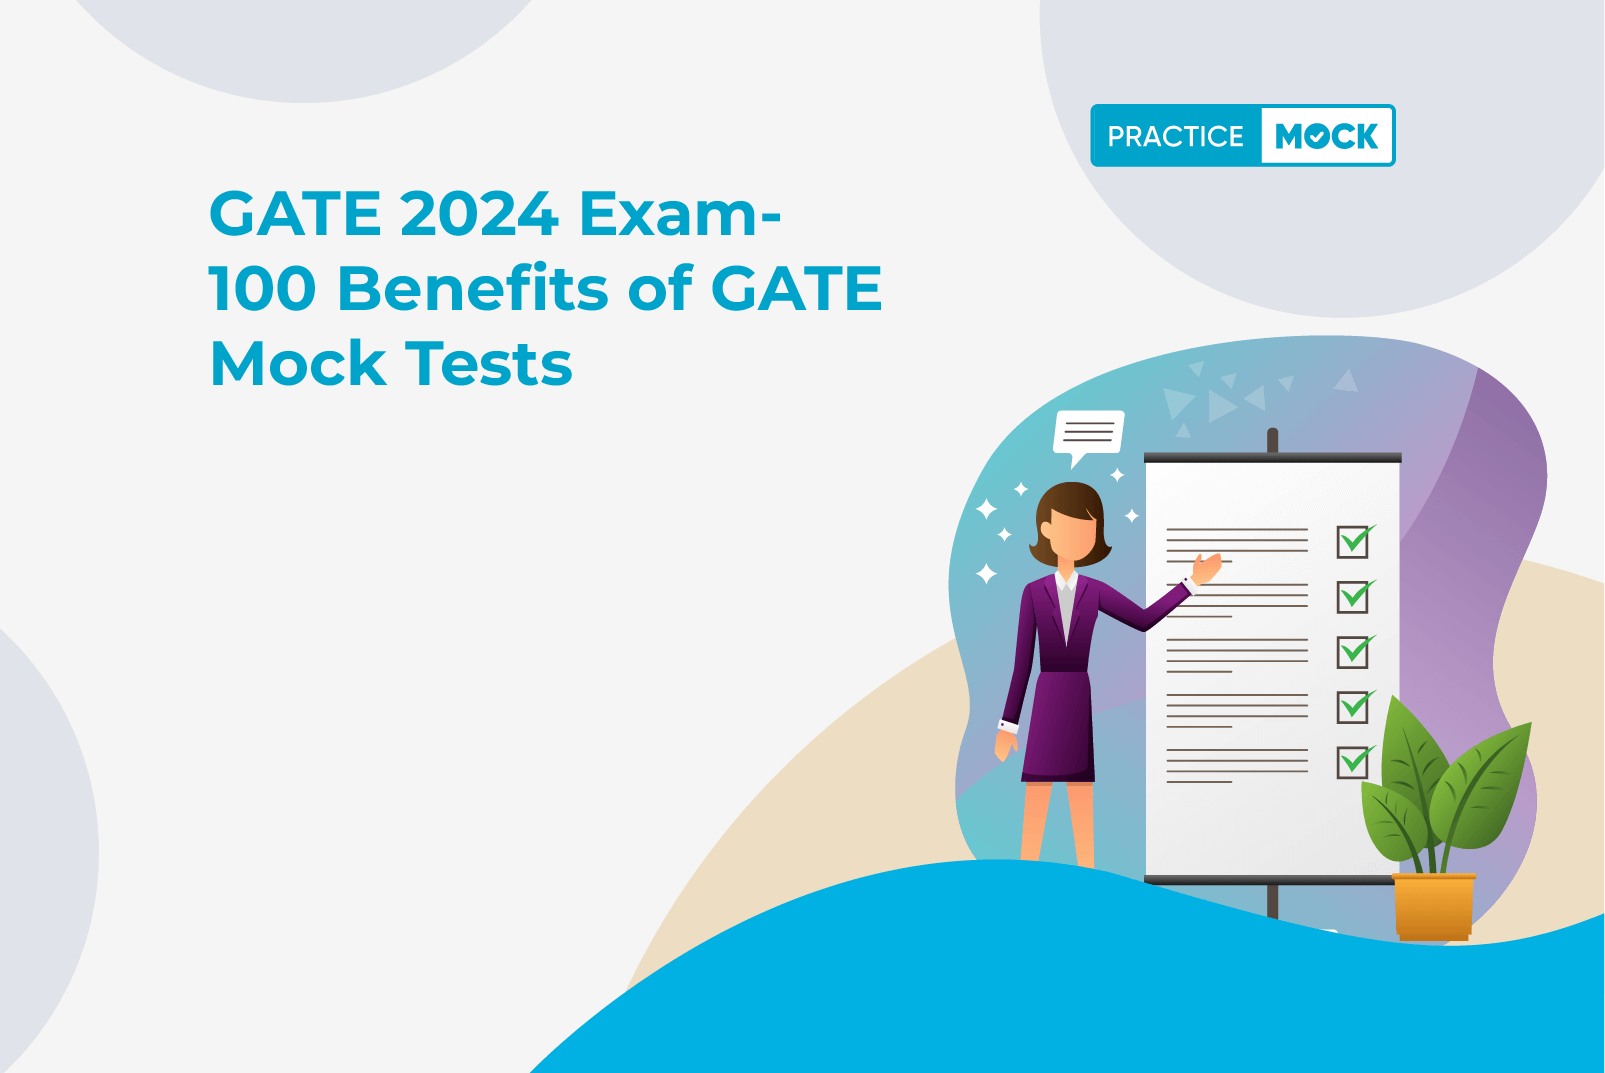 GATE 2024 Exam-100 Benefits of GATE Mock Tests